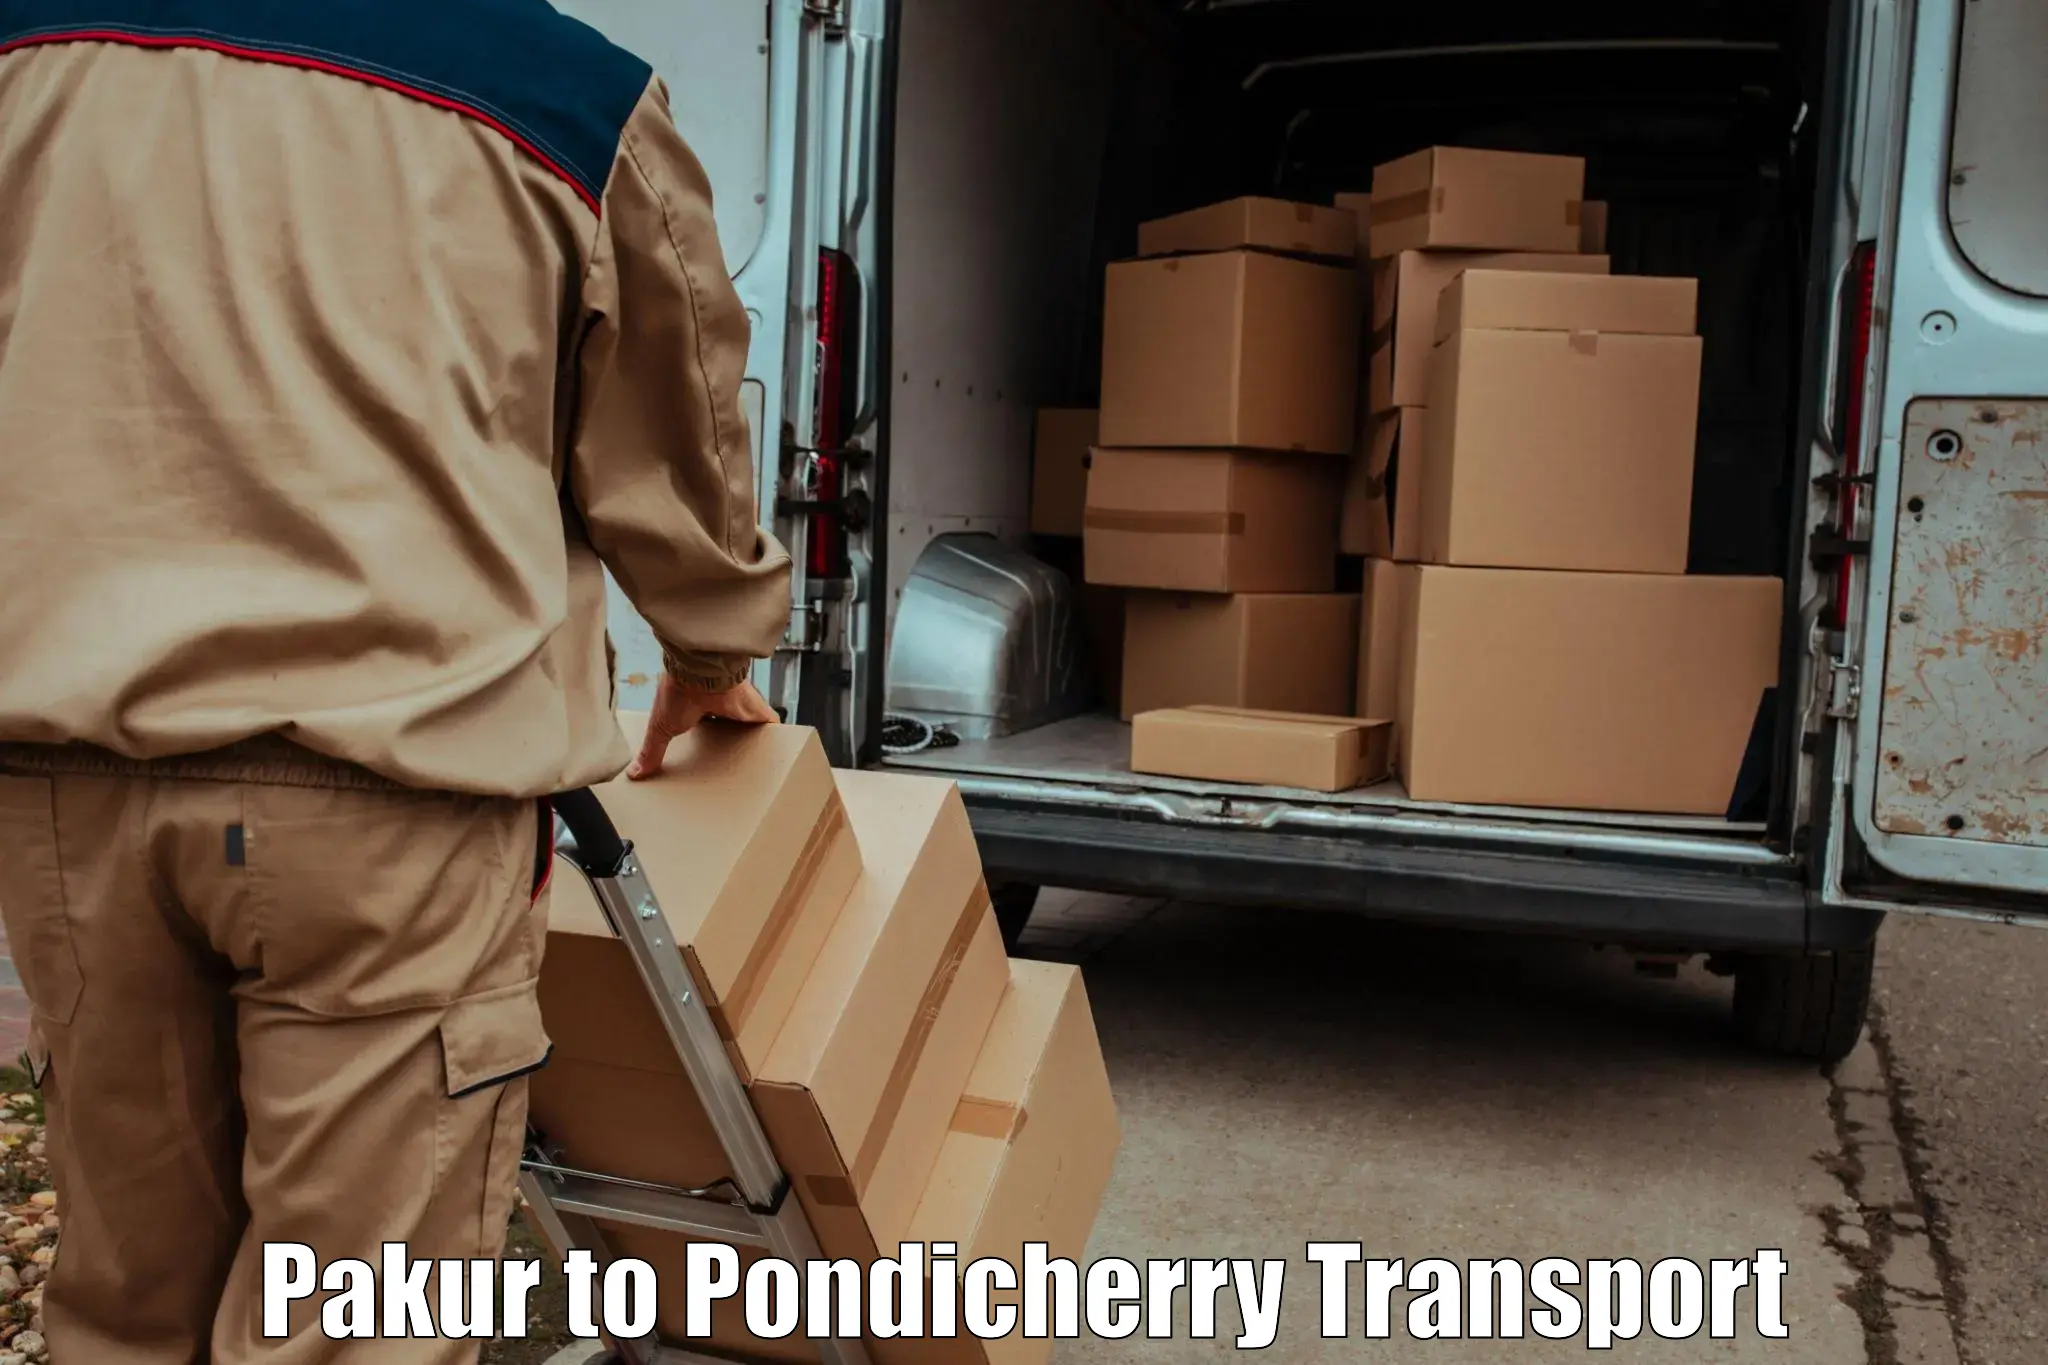 Container transport service Pakur to Pondicherry University